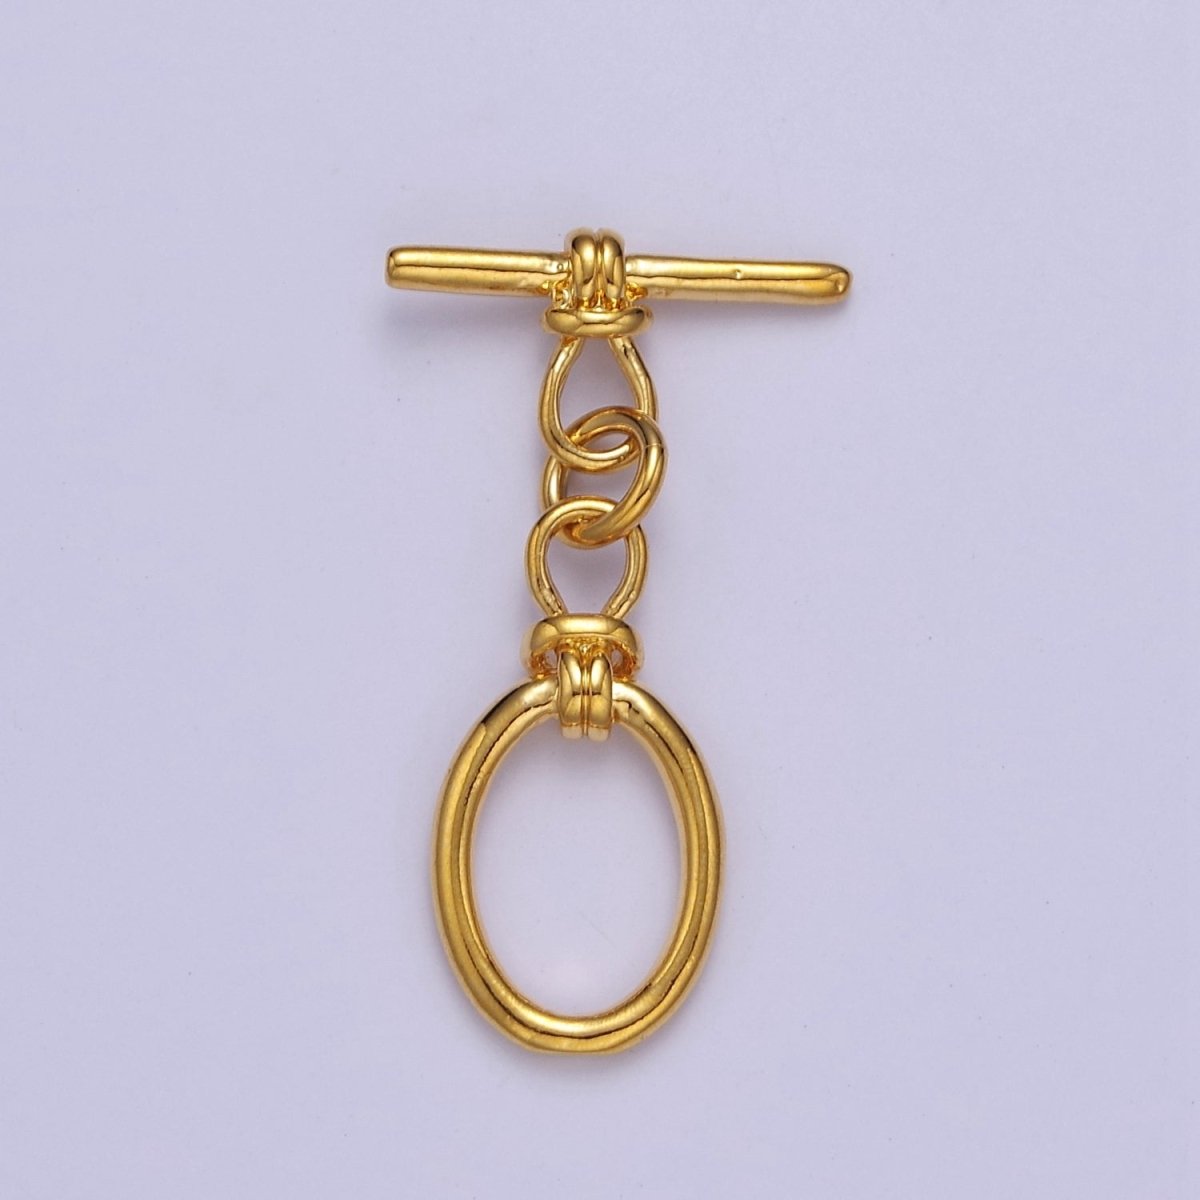 24k Gold Filled Oval Toggle Clasp, Jewelry Clasp OT Clasp Findings L-699 L-700 L-701 - DLUXCA